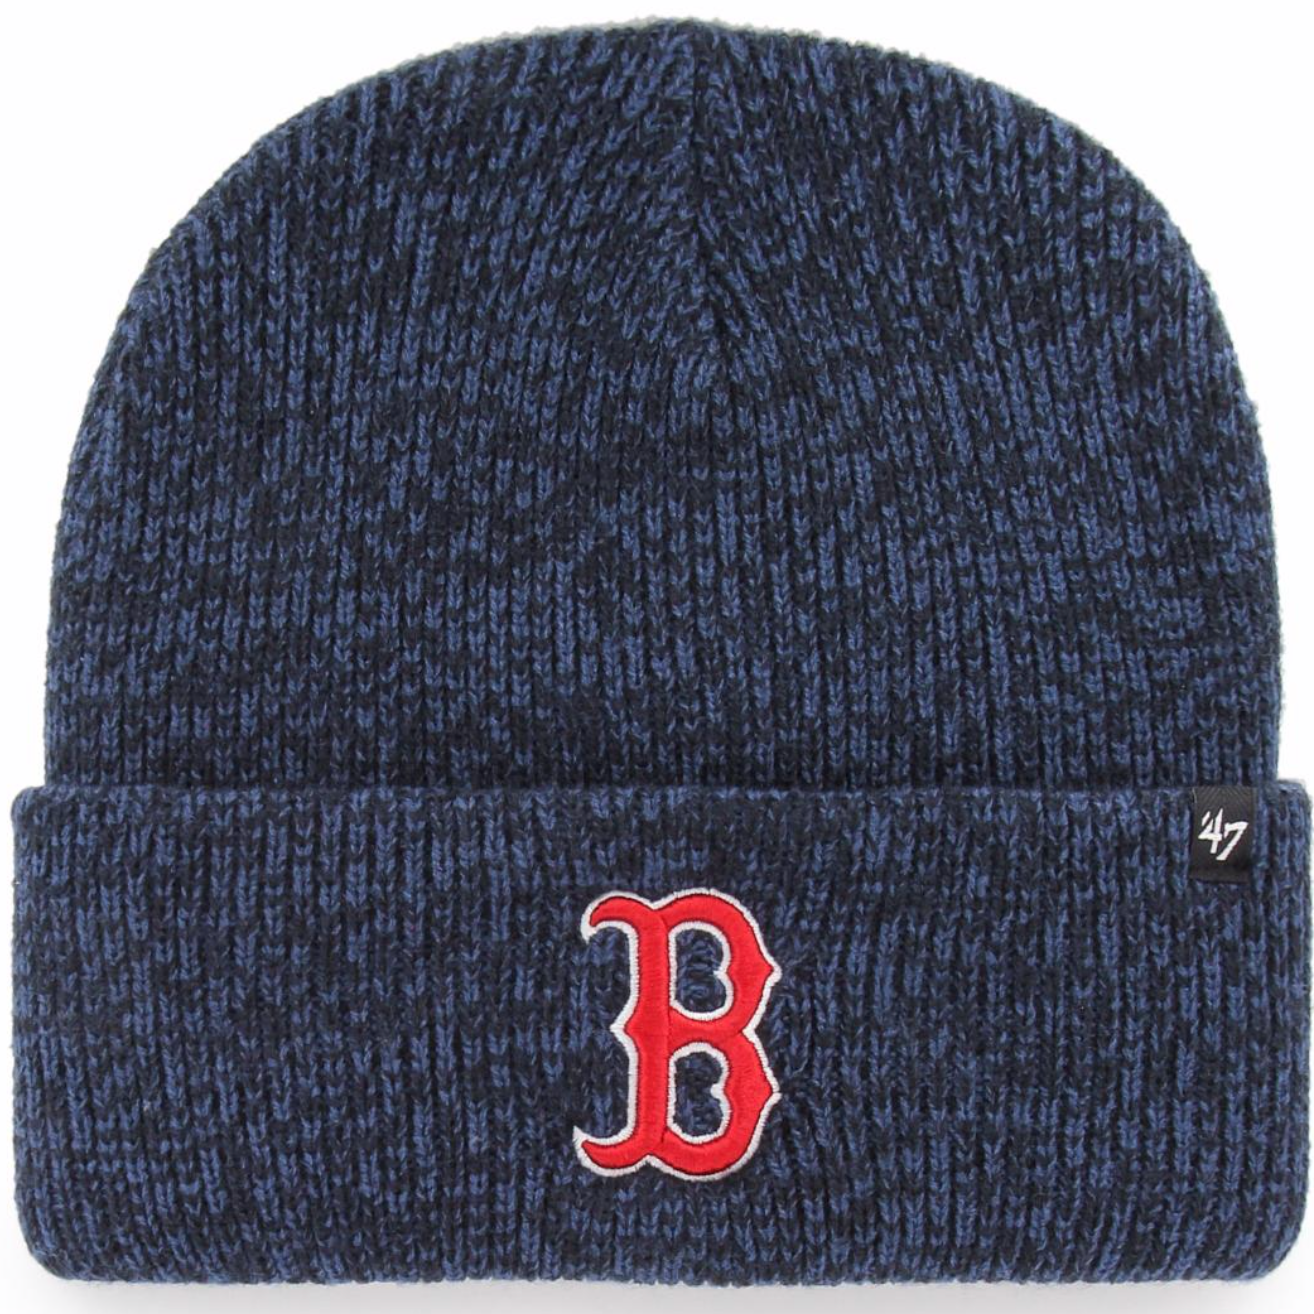 '47 Brand - Boston Red Sox Knit - Navy